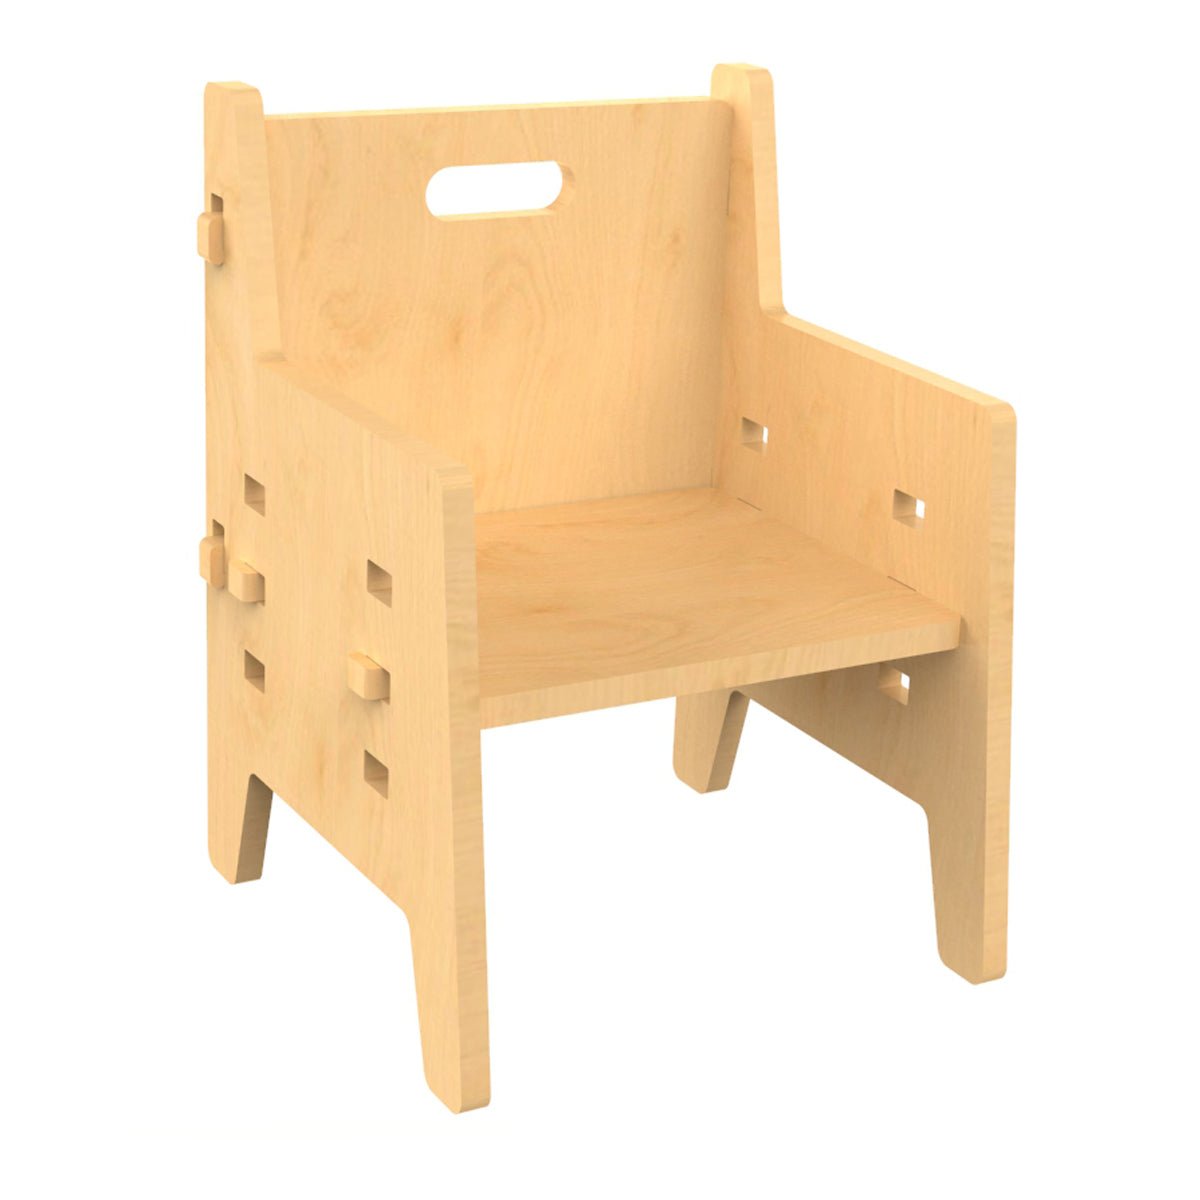 X&Y Purple Mango Weaning Chair - Natural - FG120918N